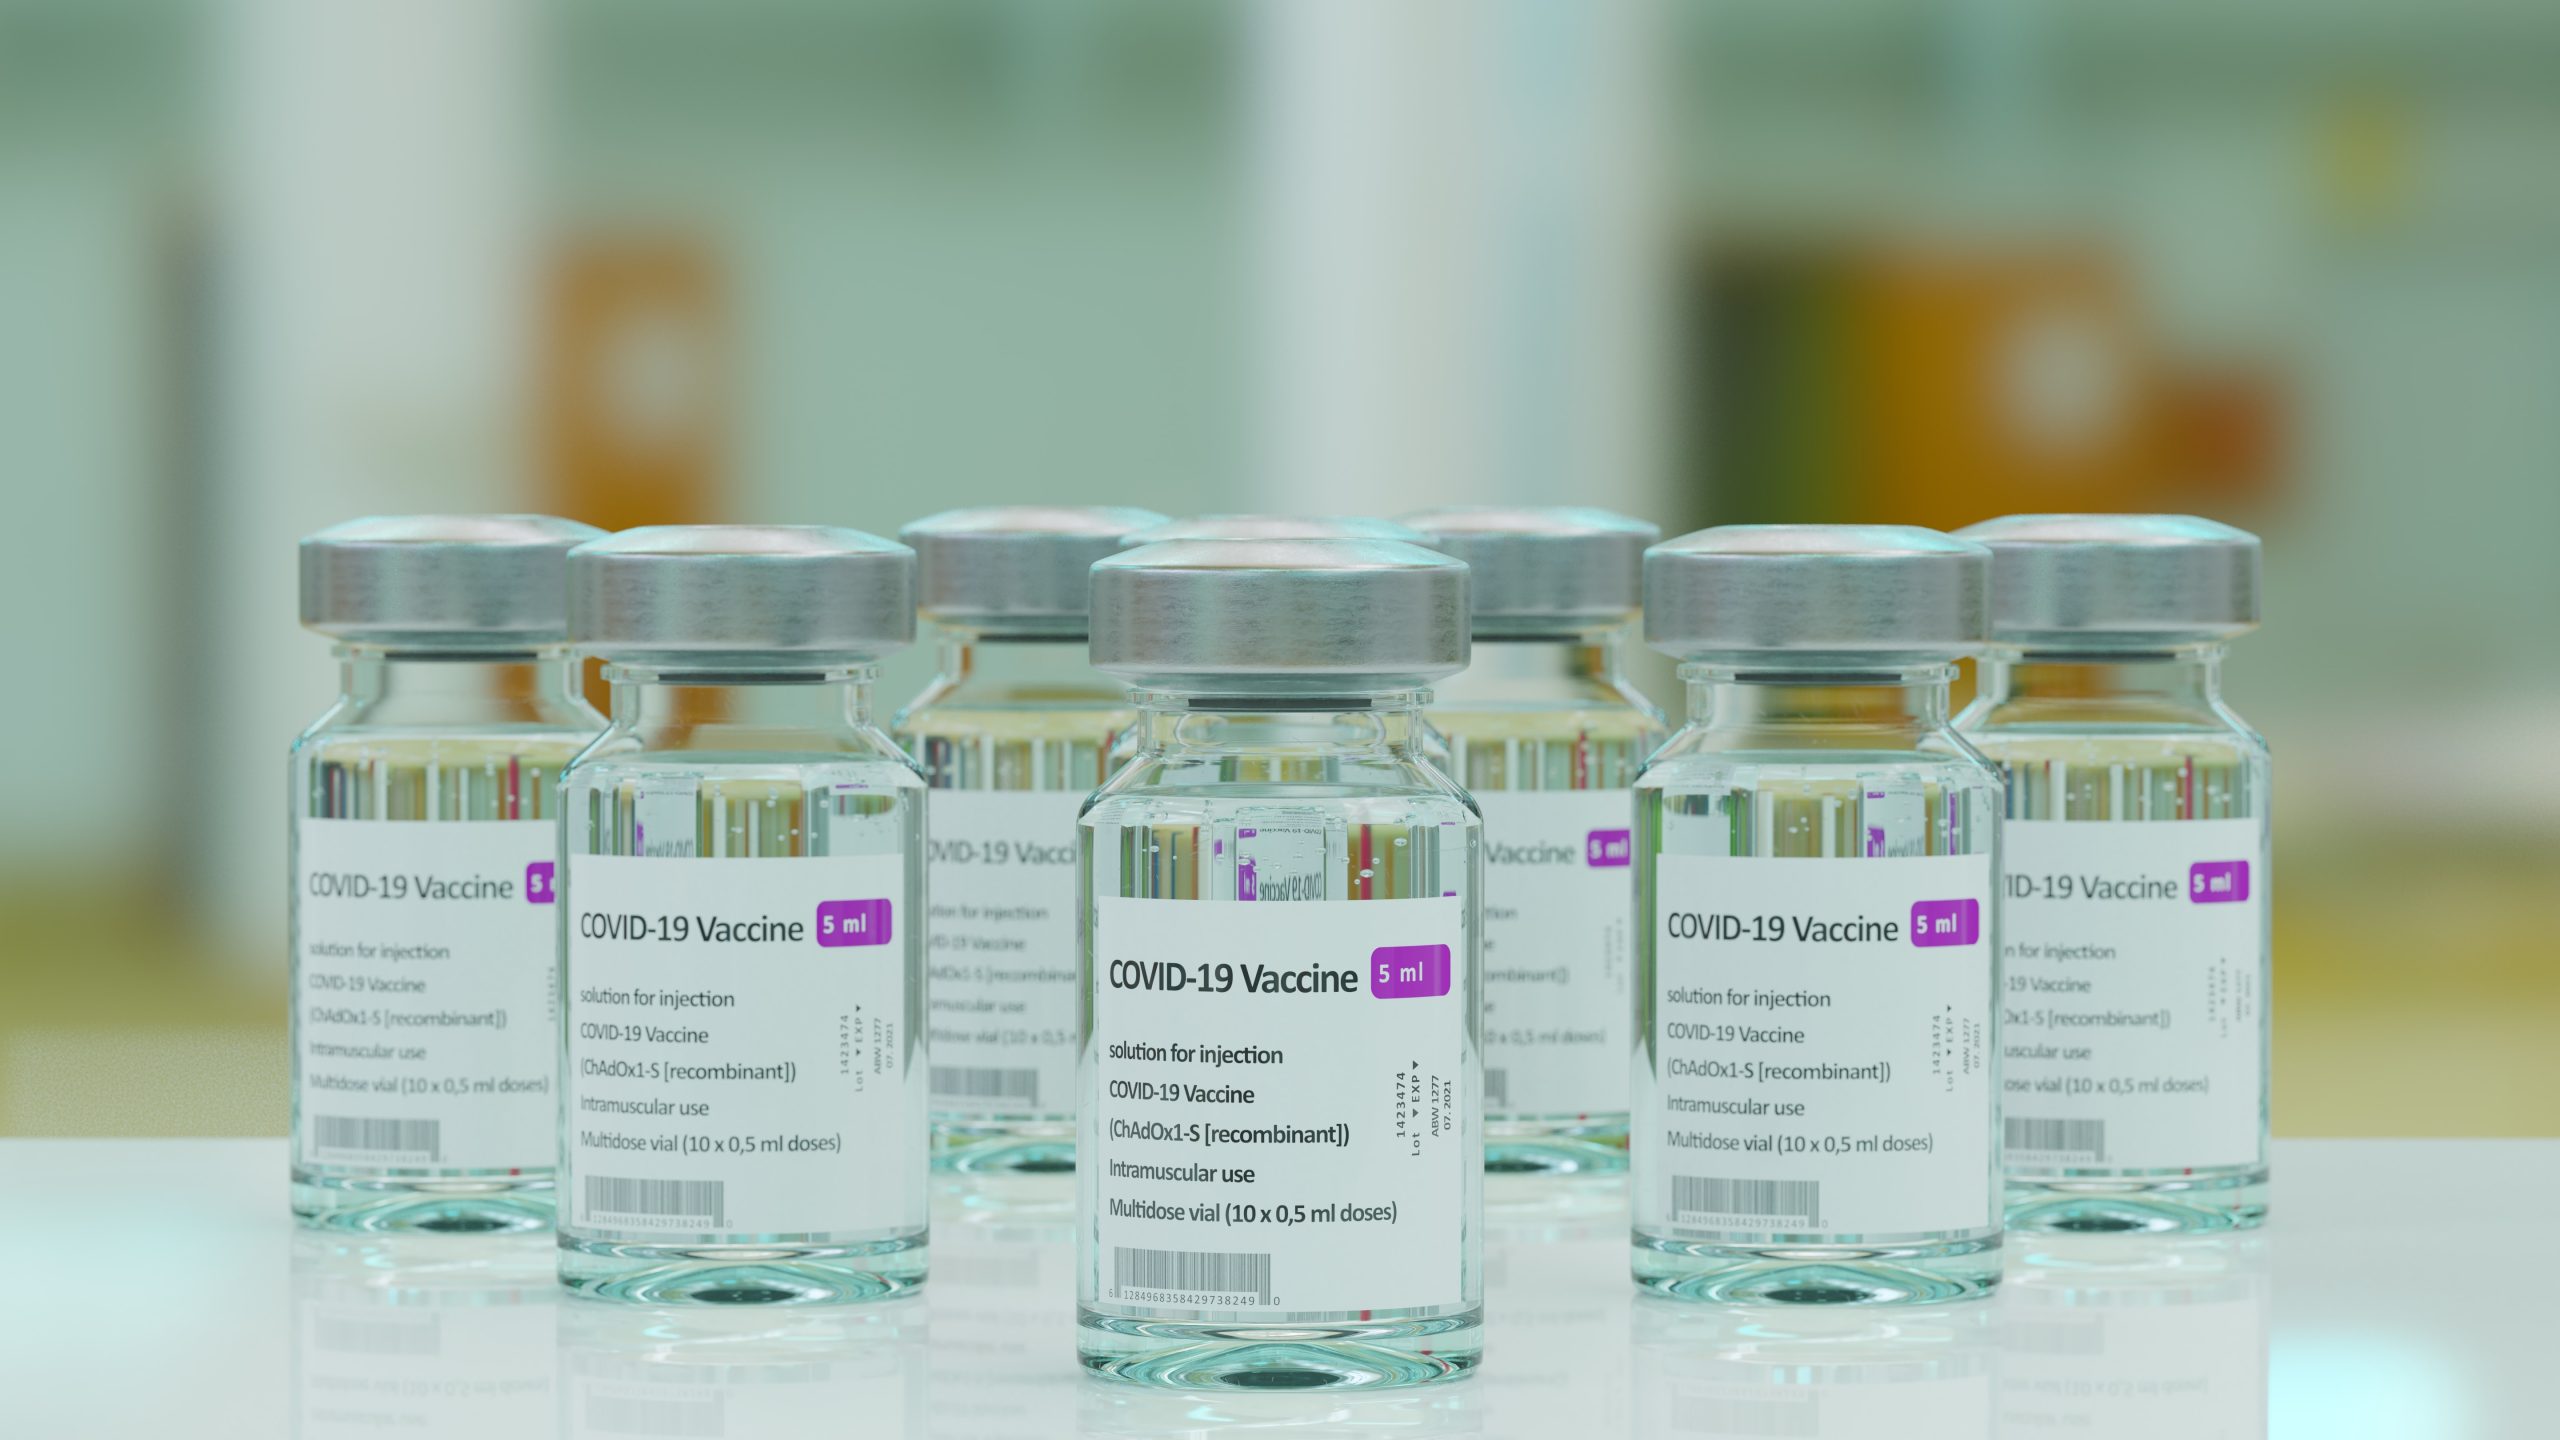 Qatar-based study highlights rare case of COVID-19 vaccine-induced myocarditis